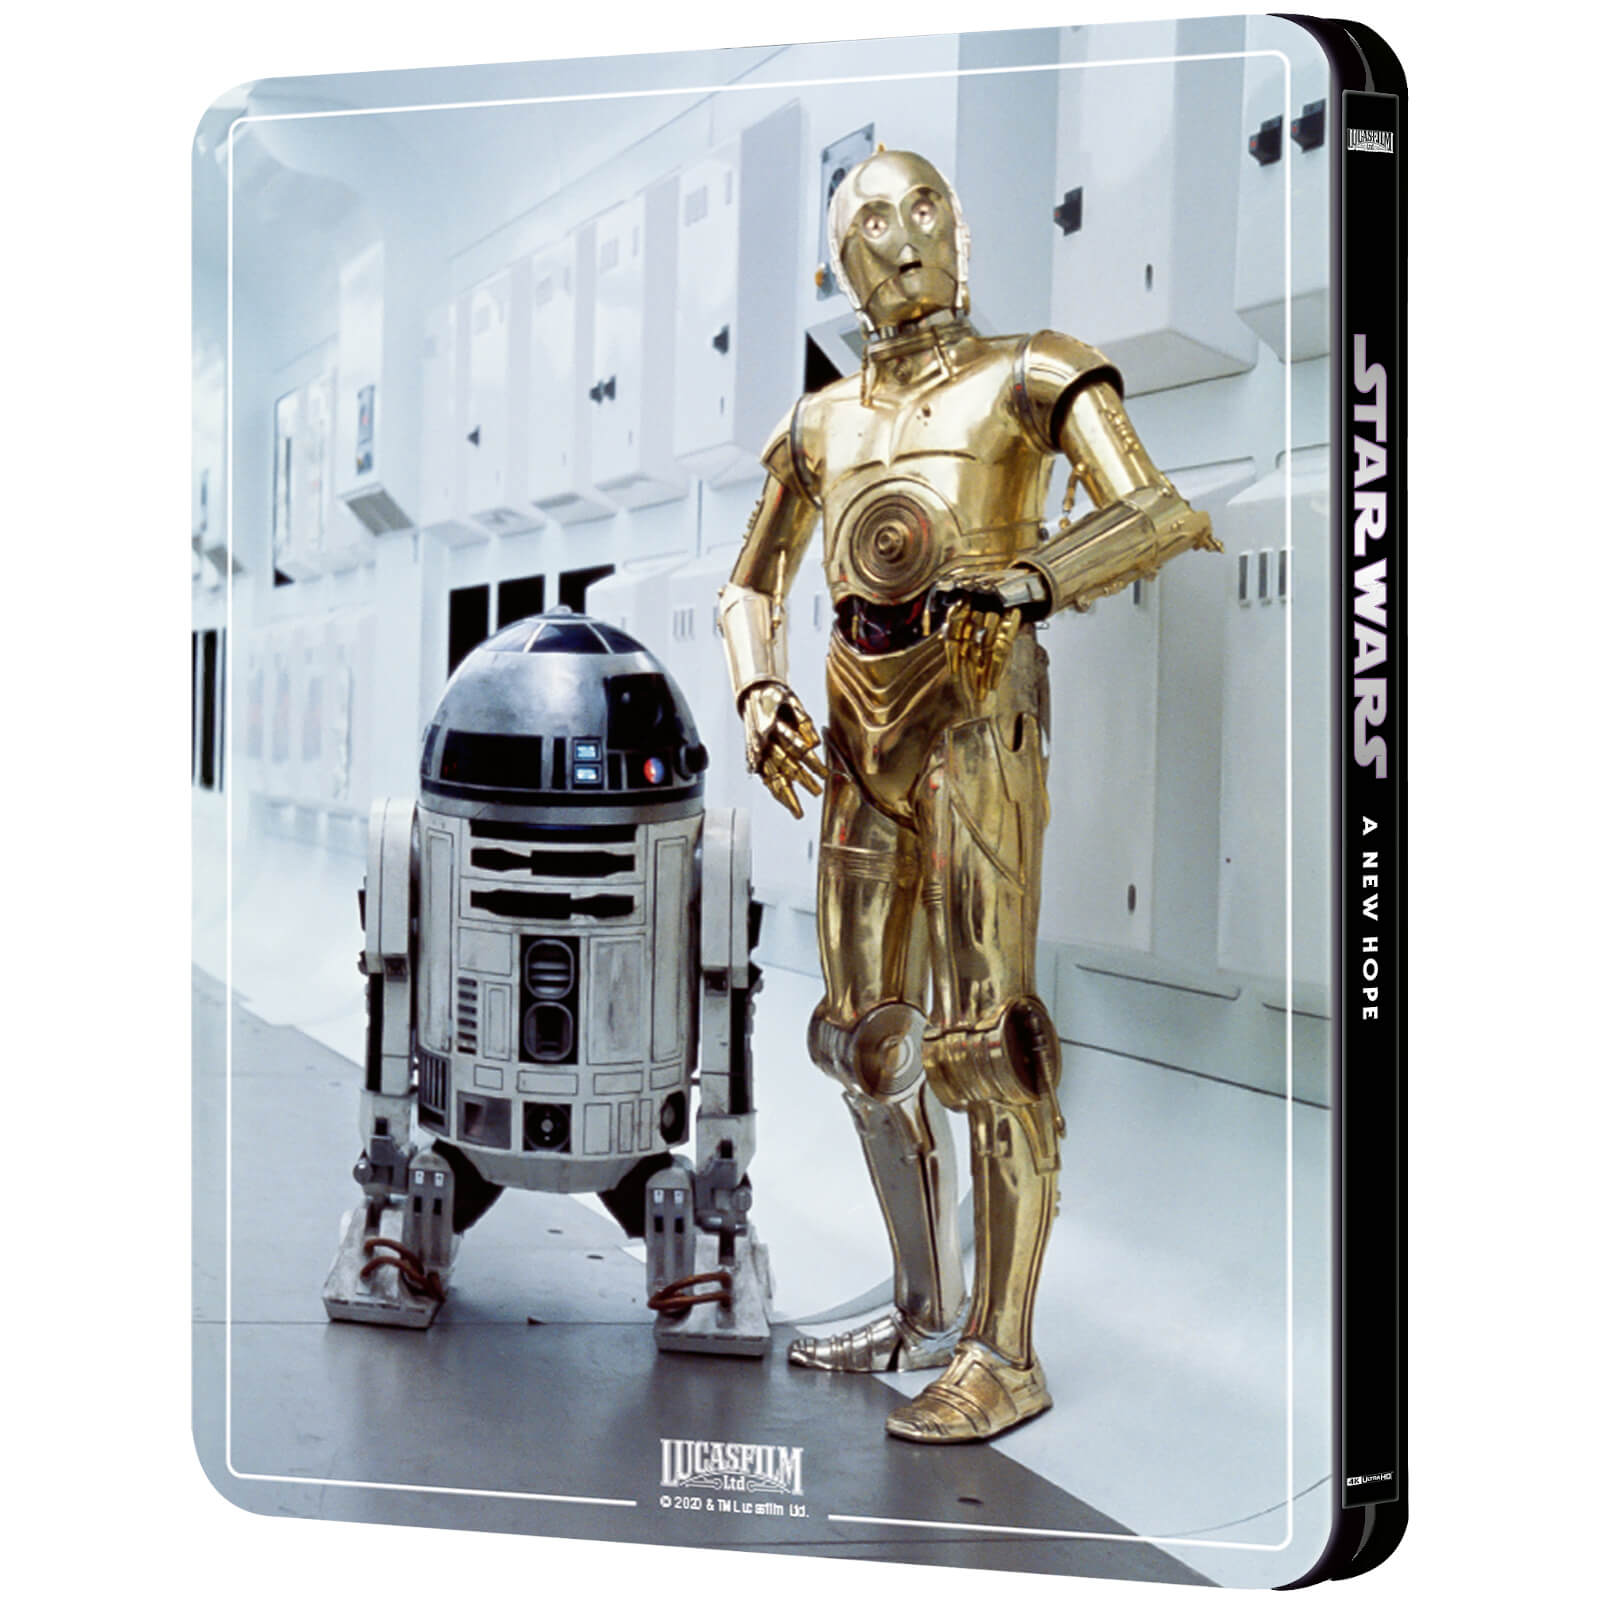 Star-Wars-New-Hope-steelbook-4K-2-zavvi.jpg